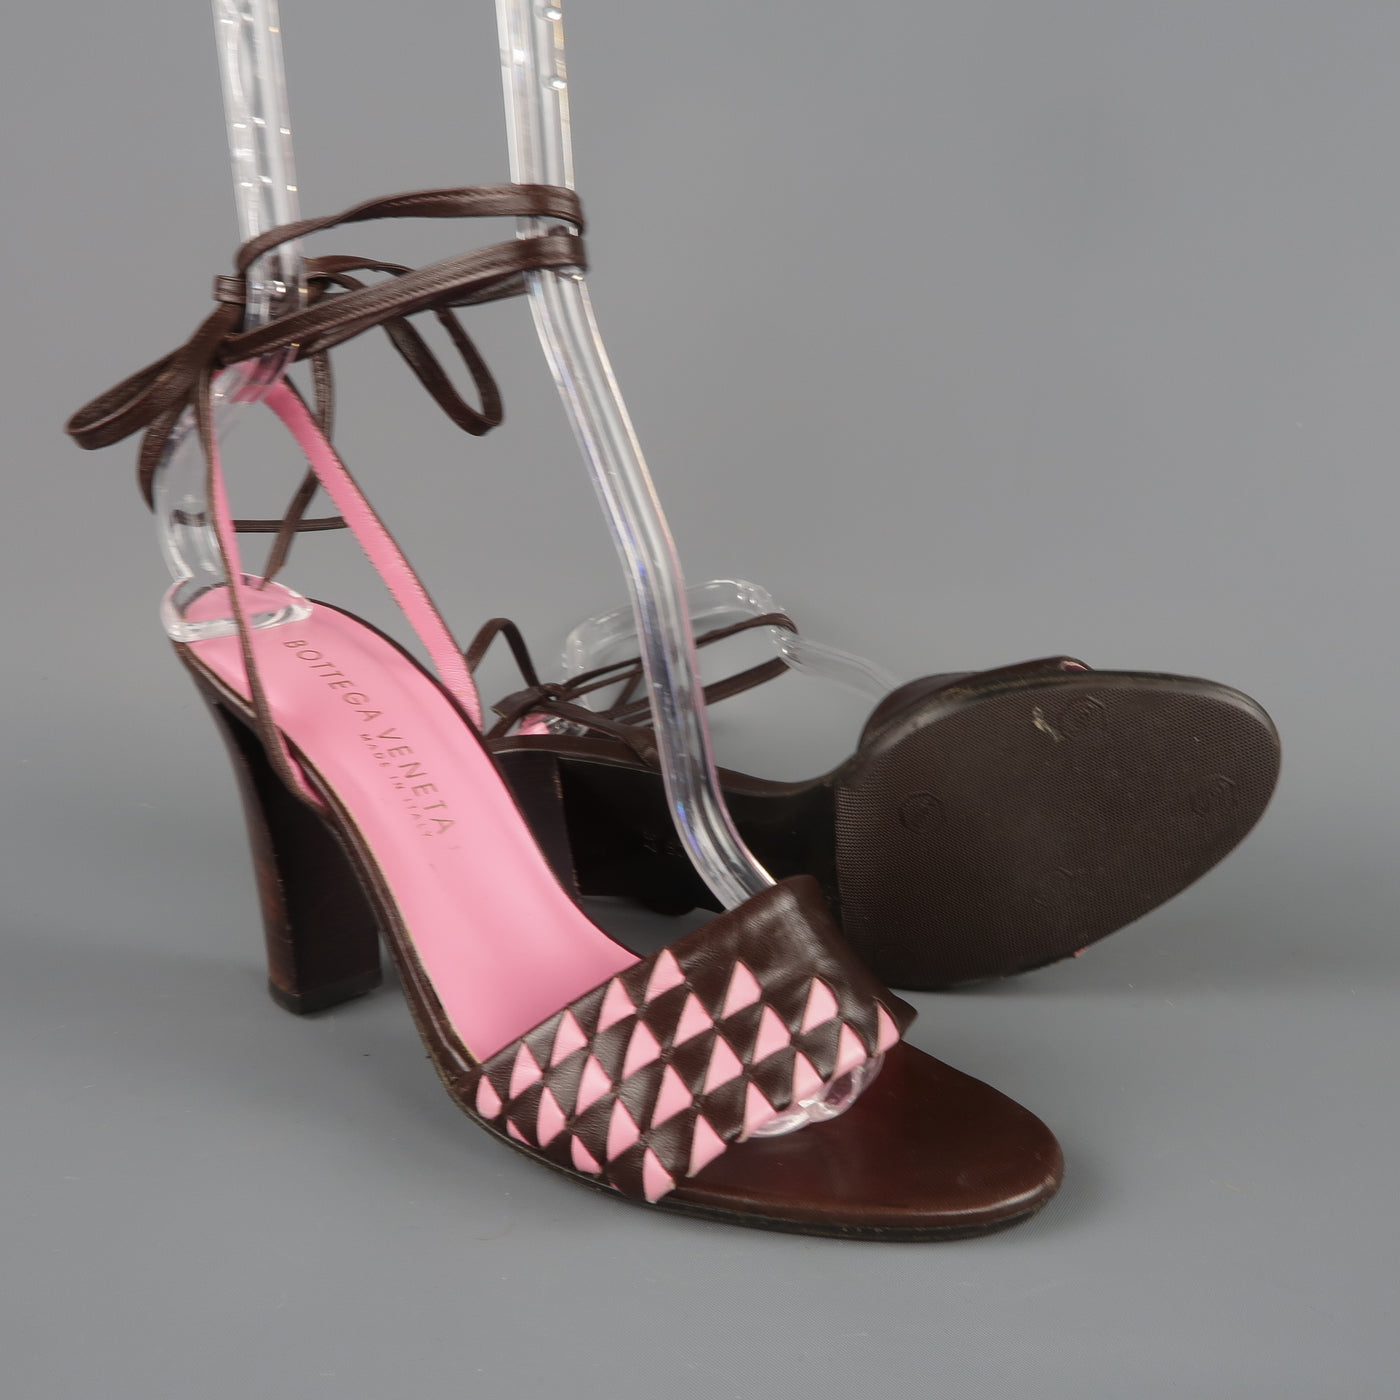 BOTTEGA VENETA Size 7 Brown & Pink Leather Ankle Tie Sandals